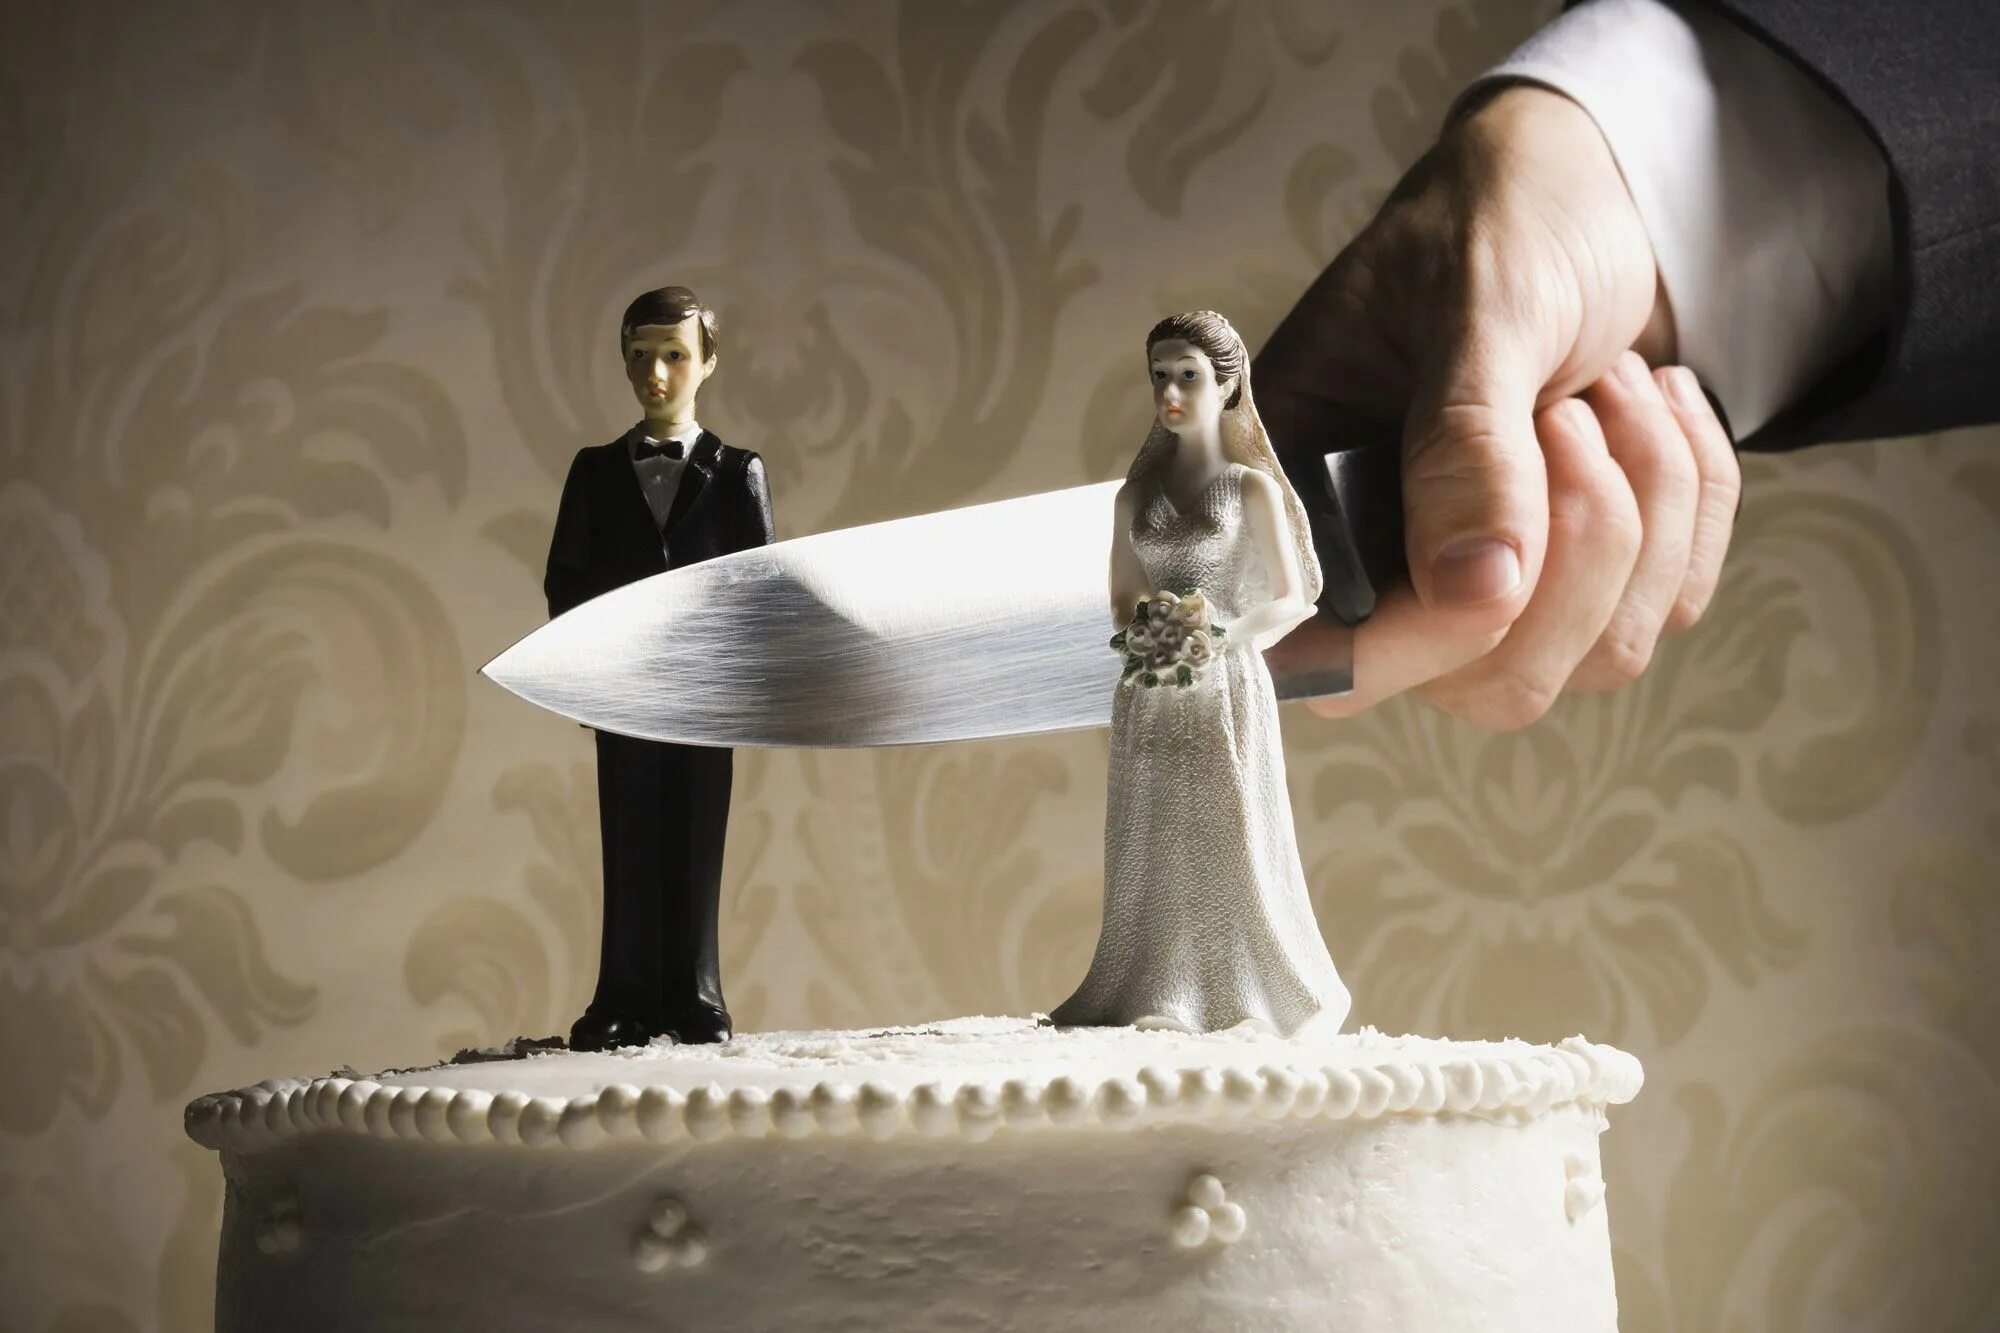 Развод брака. Фотосессия развод. Разрыв брака. Свадьба и развод.